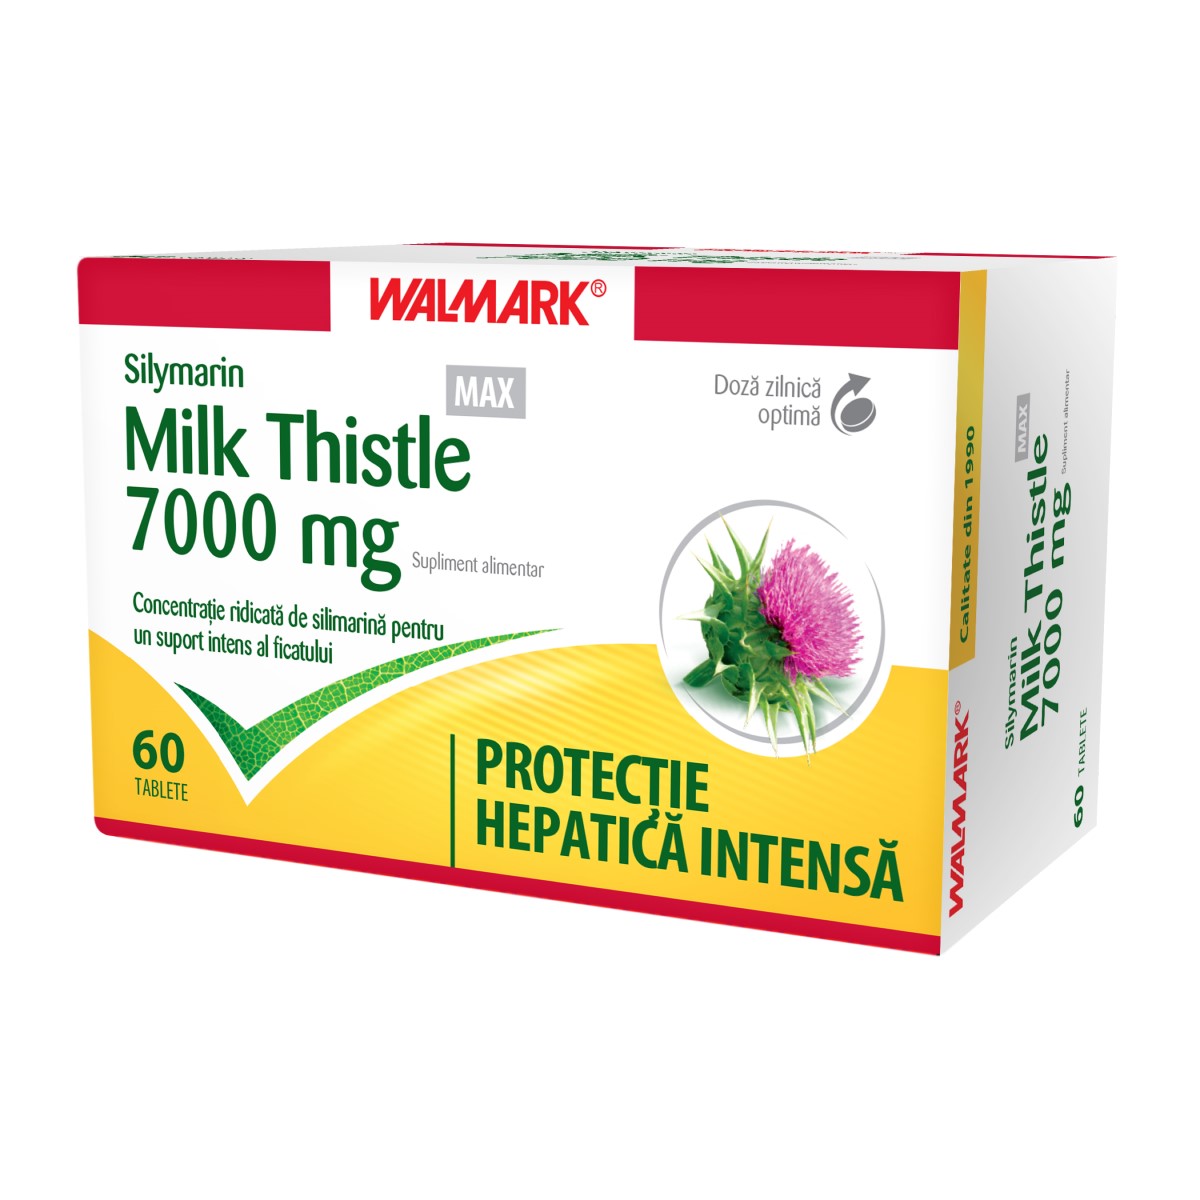 Protectoare hepatice - Silymarin Milk Thistle MAX, 60 comprimate filmate, Walmark, epastila.ro